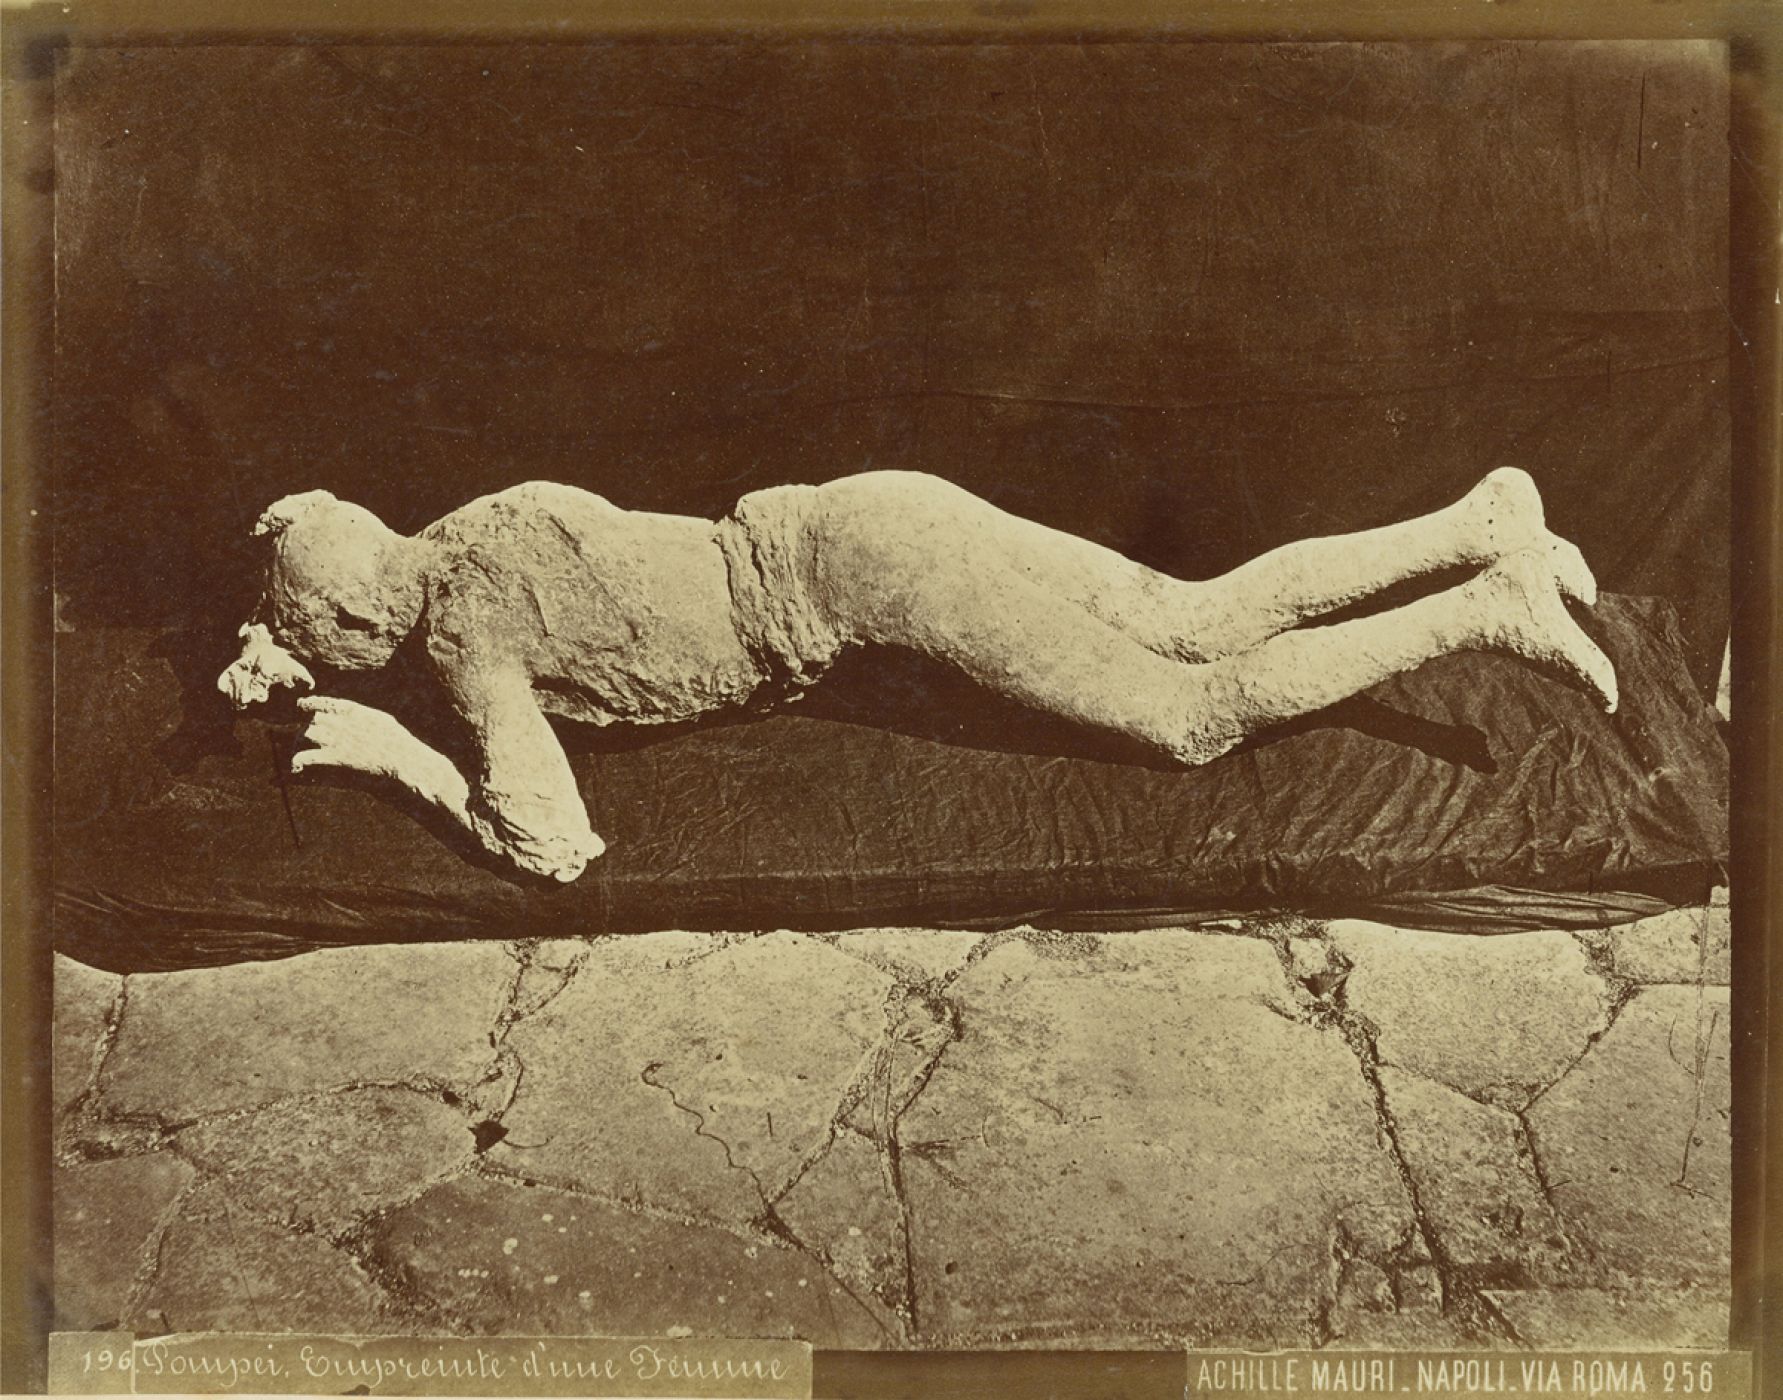 Achille Mauri, “Pompei, Empreinte d’une Femme”, 1880 ca.